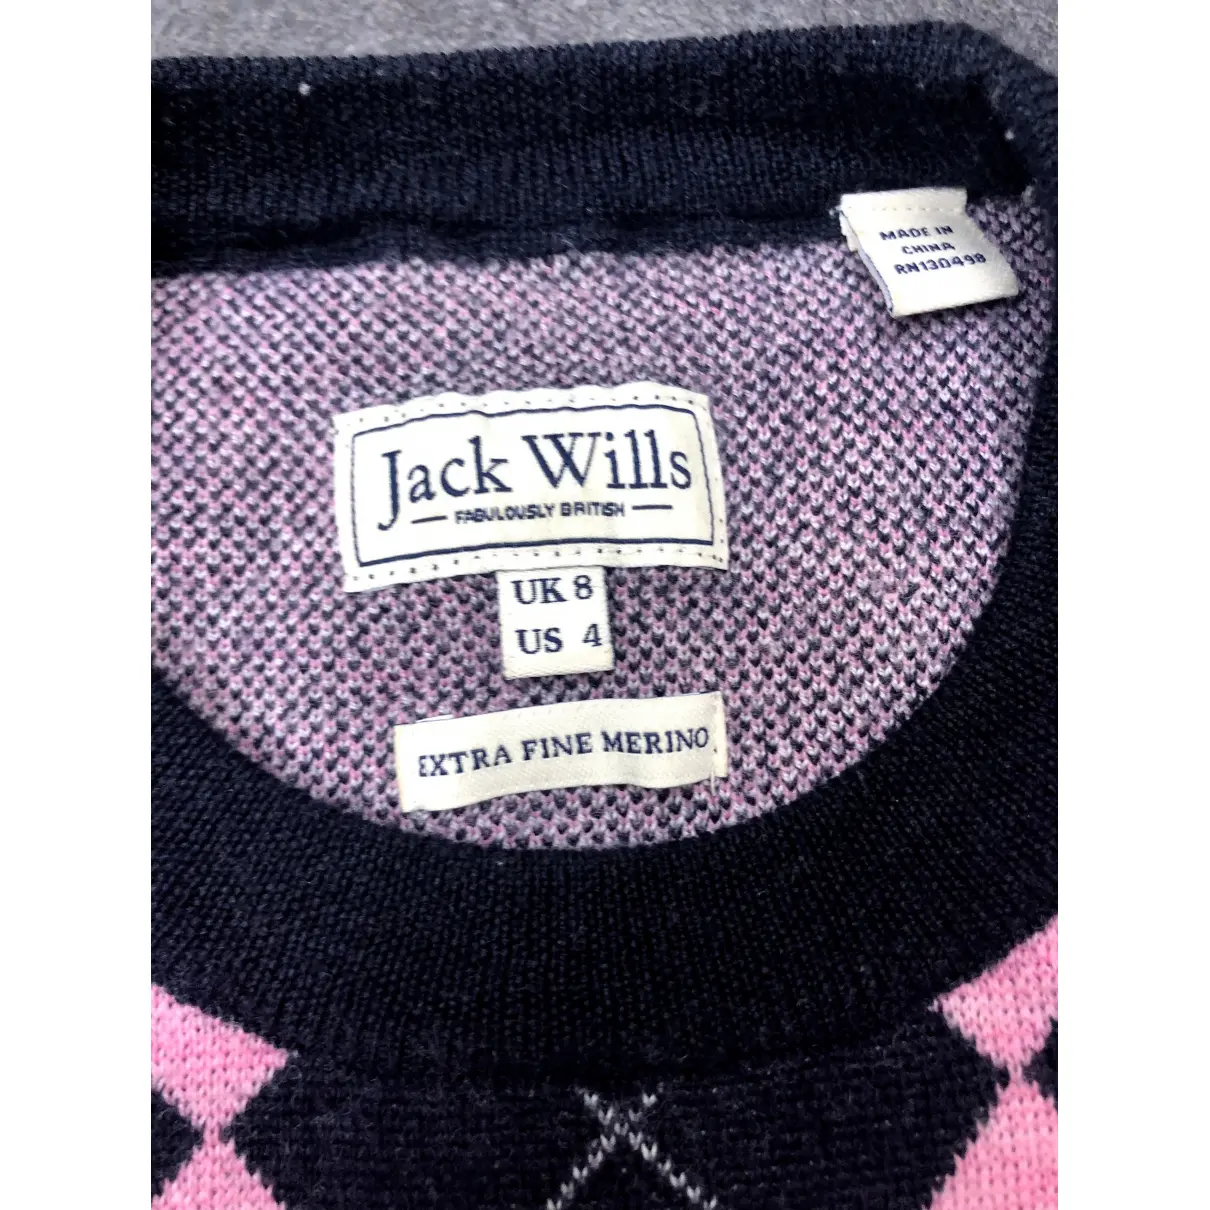 Buy Jack Wills Wool jumper online